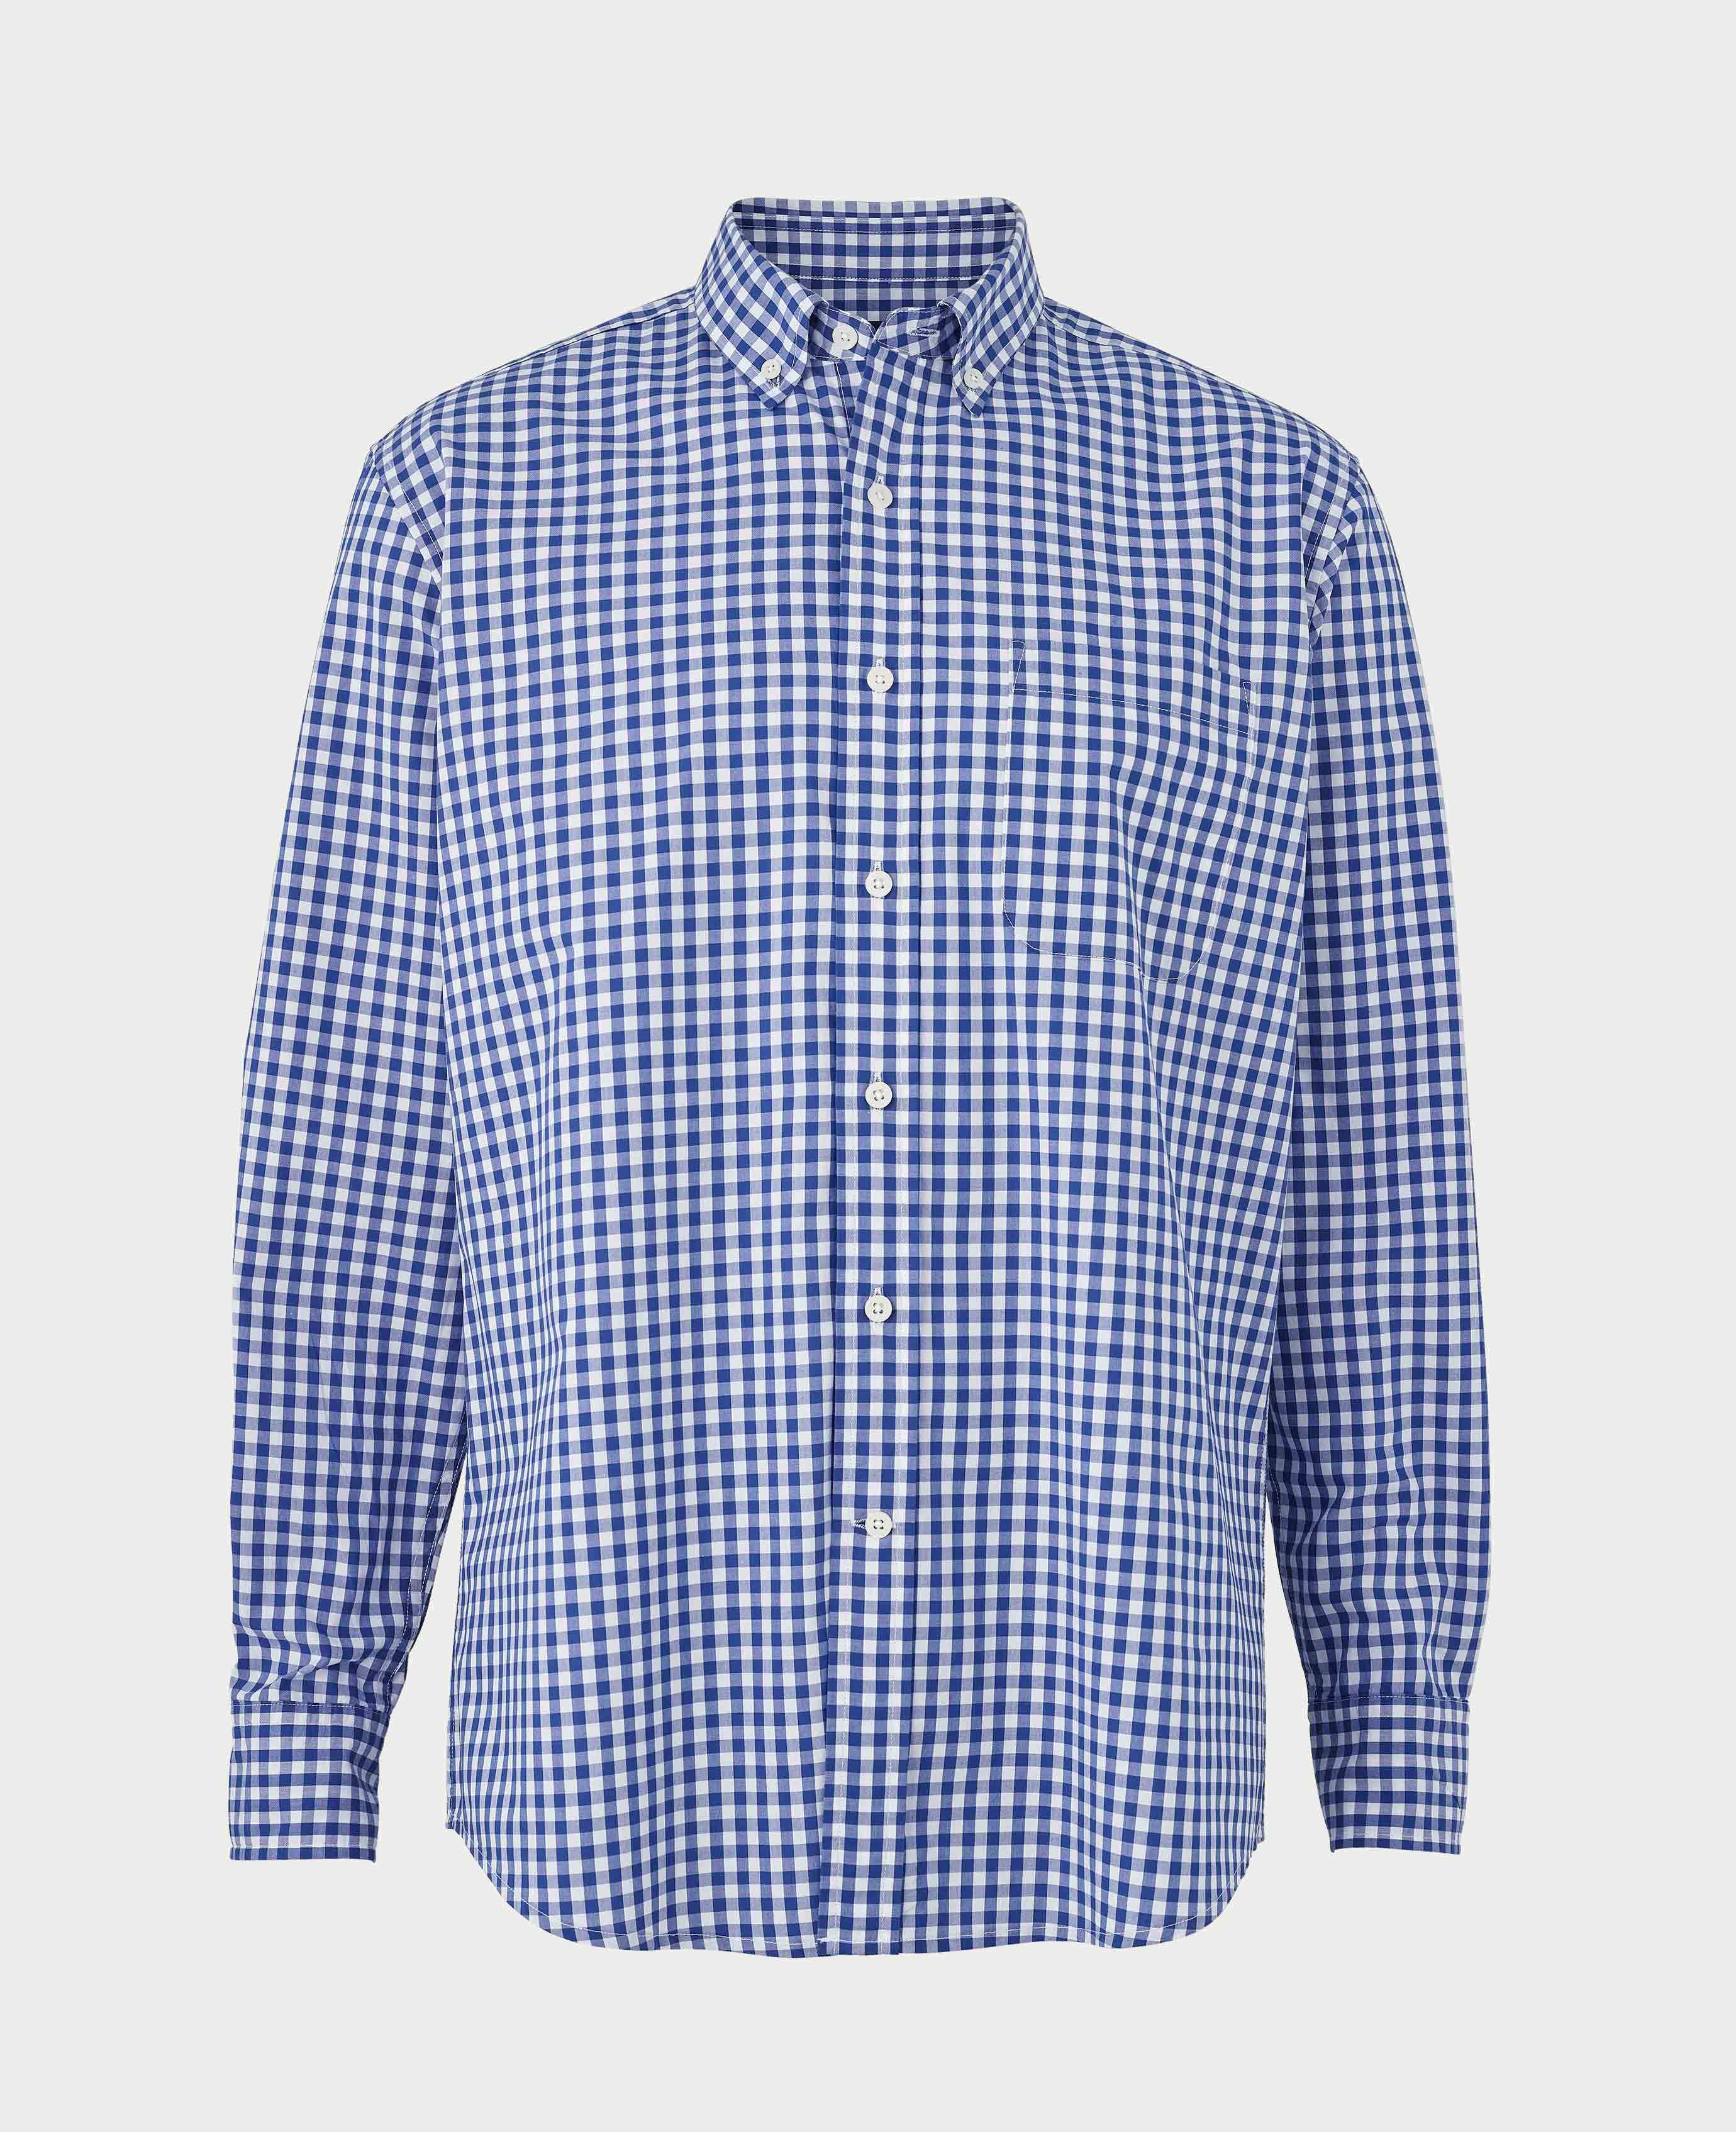 Men’s Button-Down Shirt in Blue Check | Savile Row Co